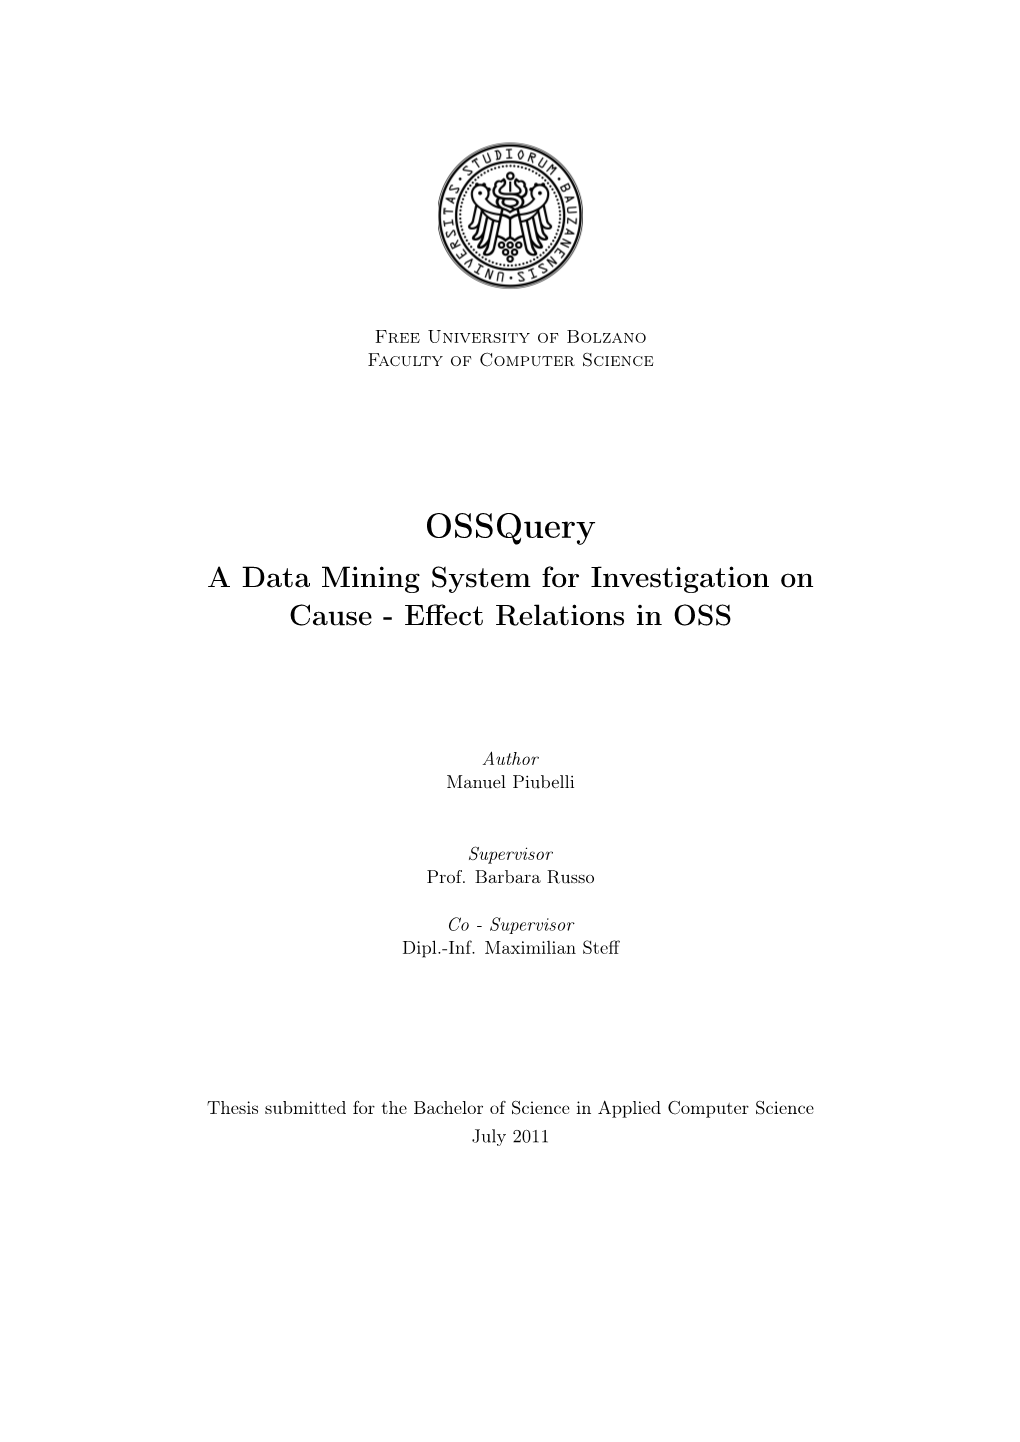 Ossquery Adataminingsystemforinvestigationon Cause - Eﬀect Relations in OSS